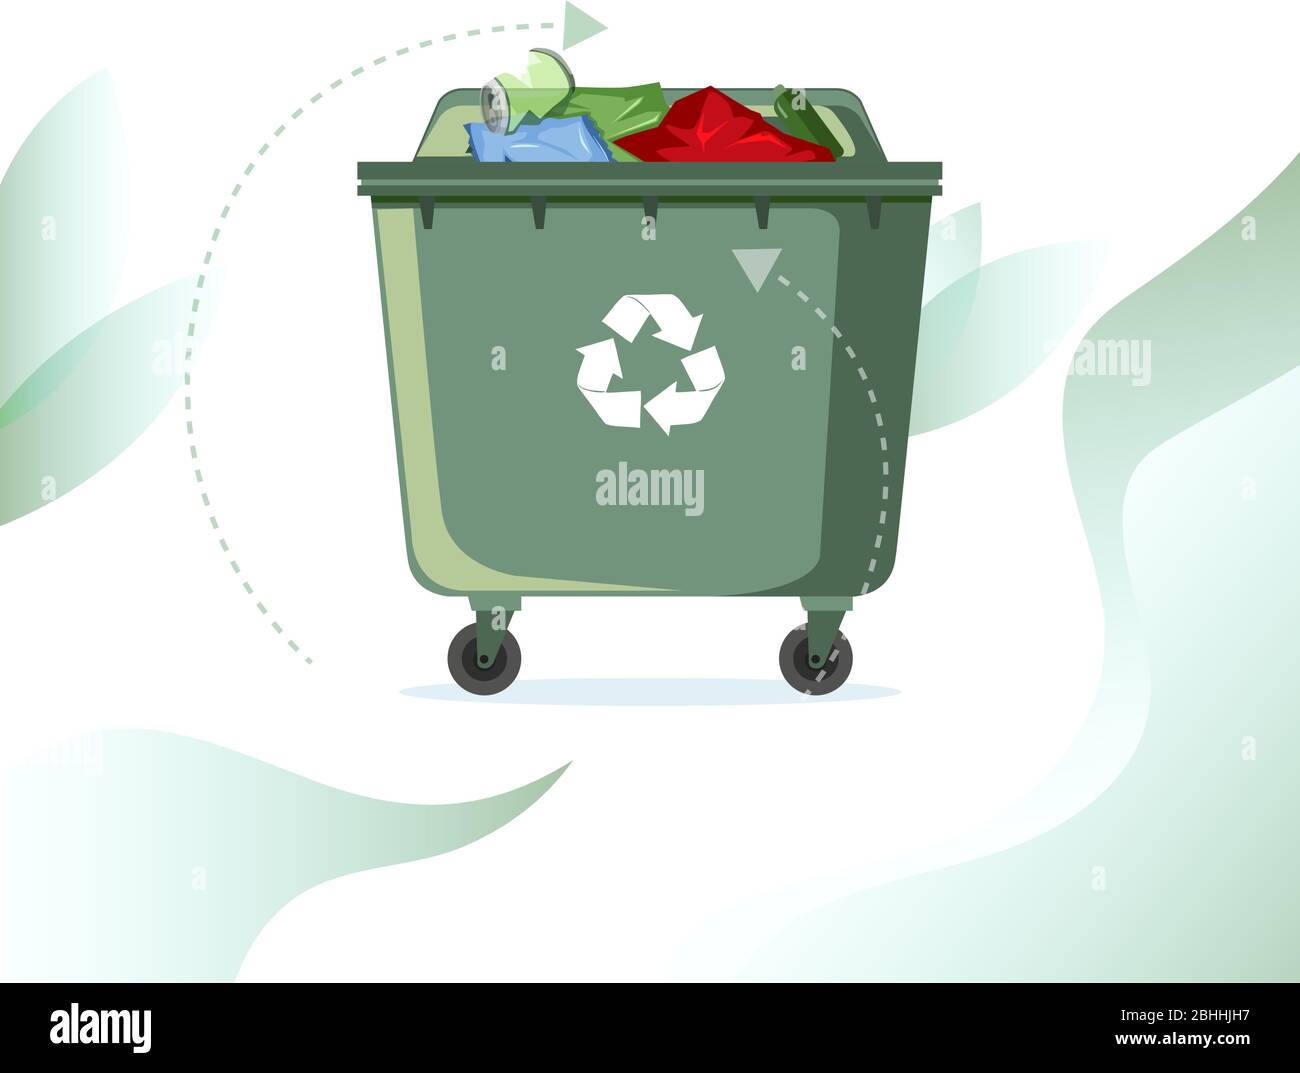 burning trash icon in a bin on wheels. flat vector illustration